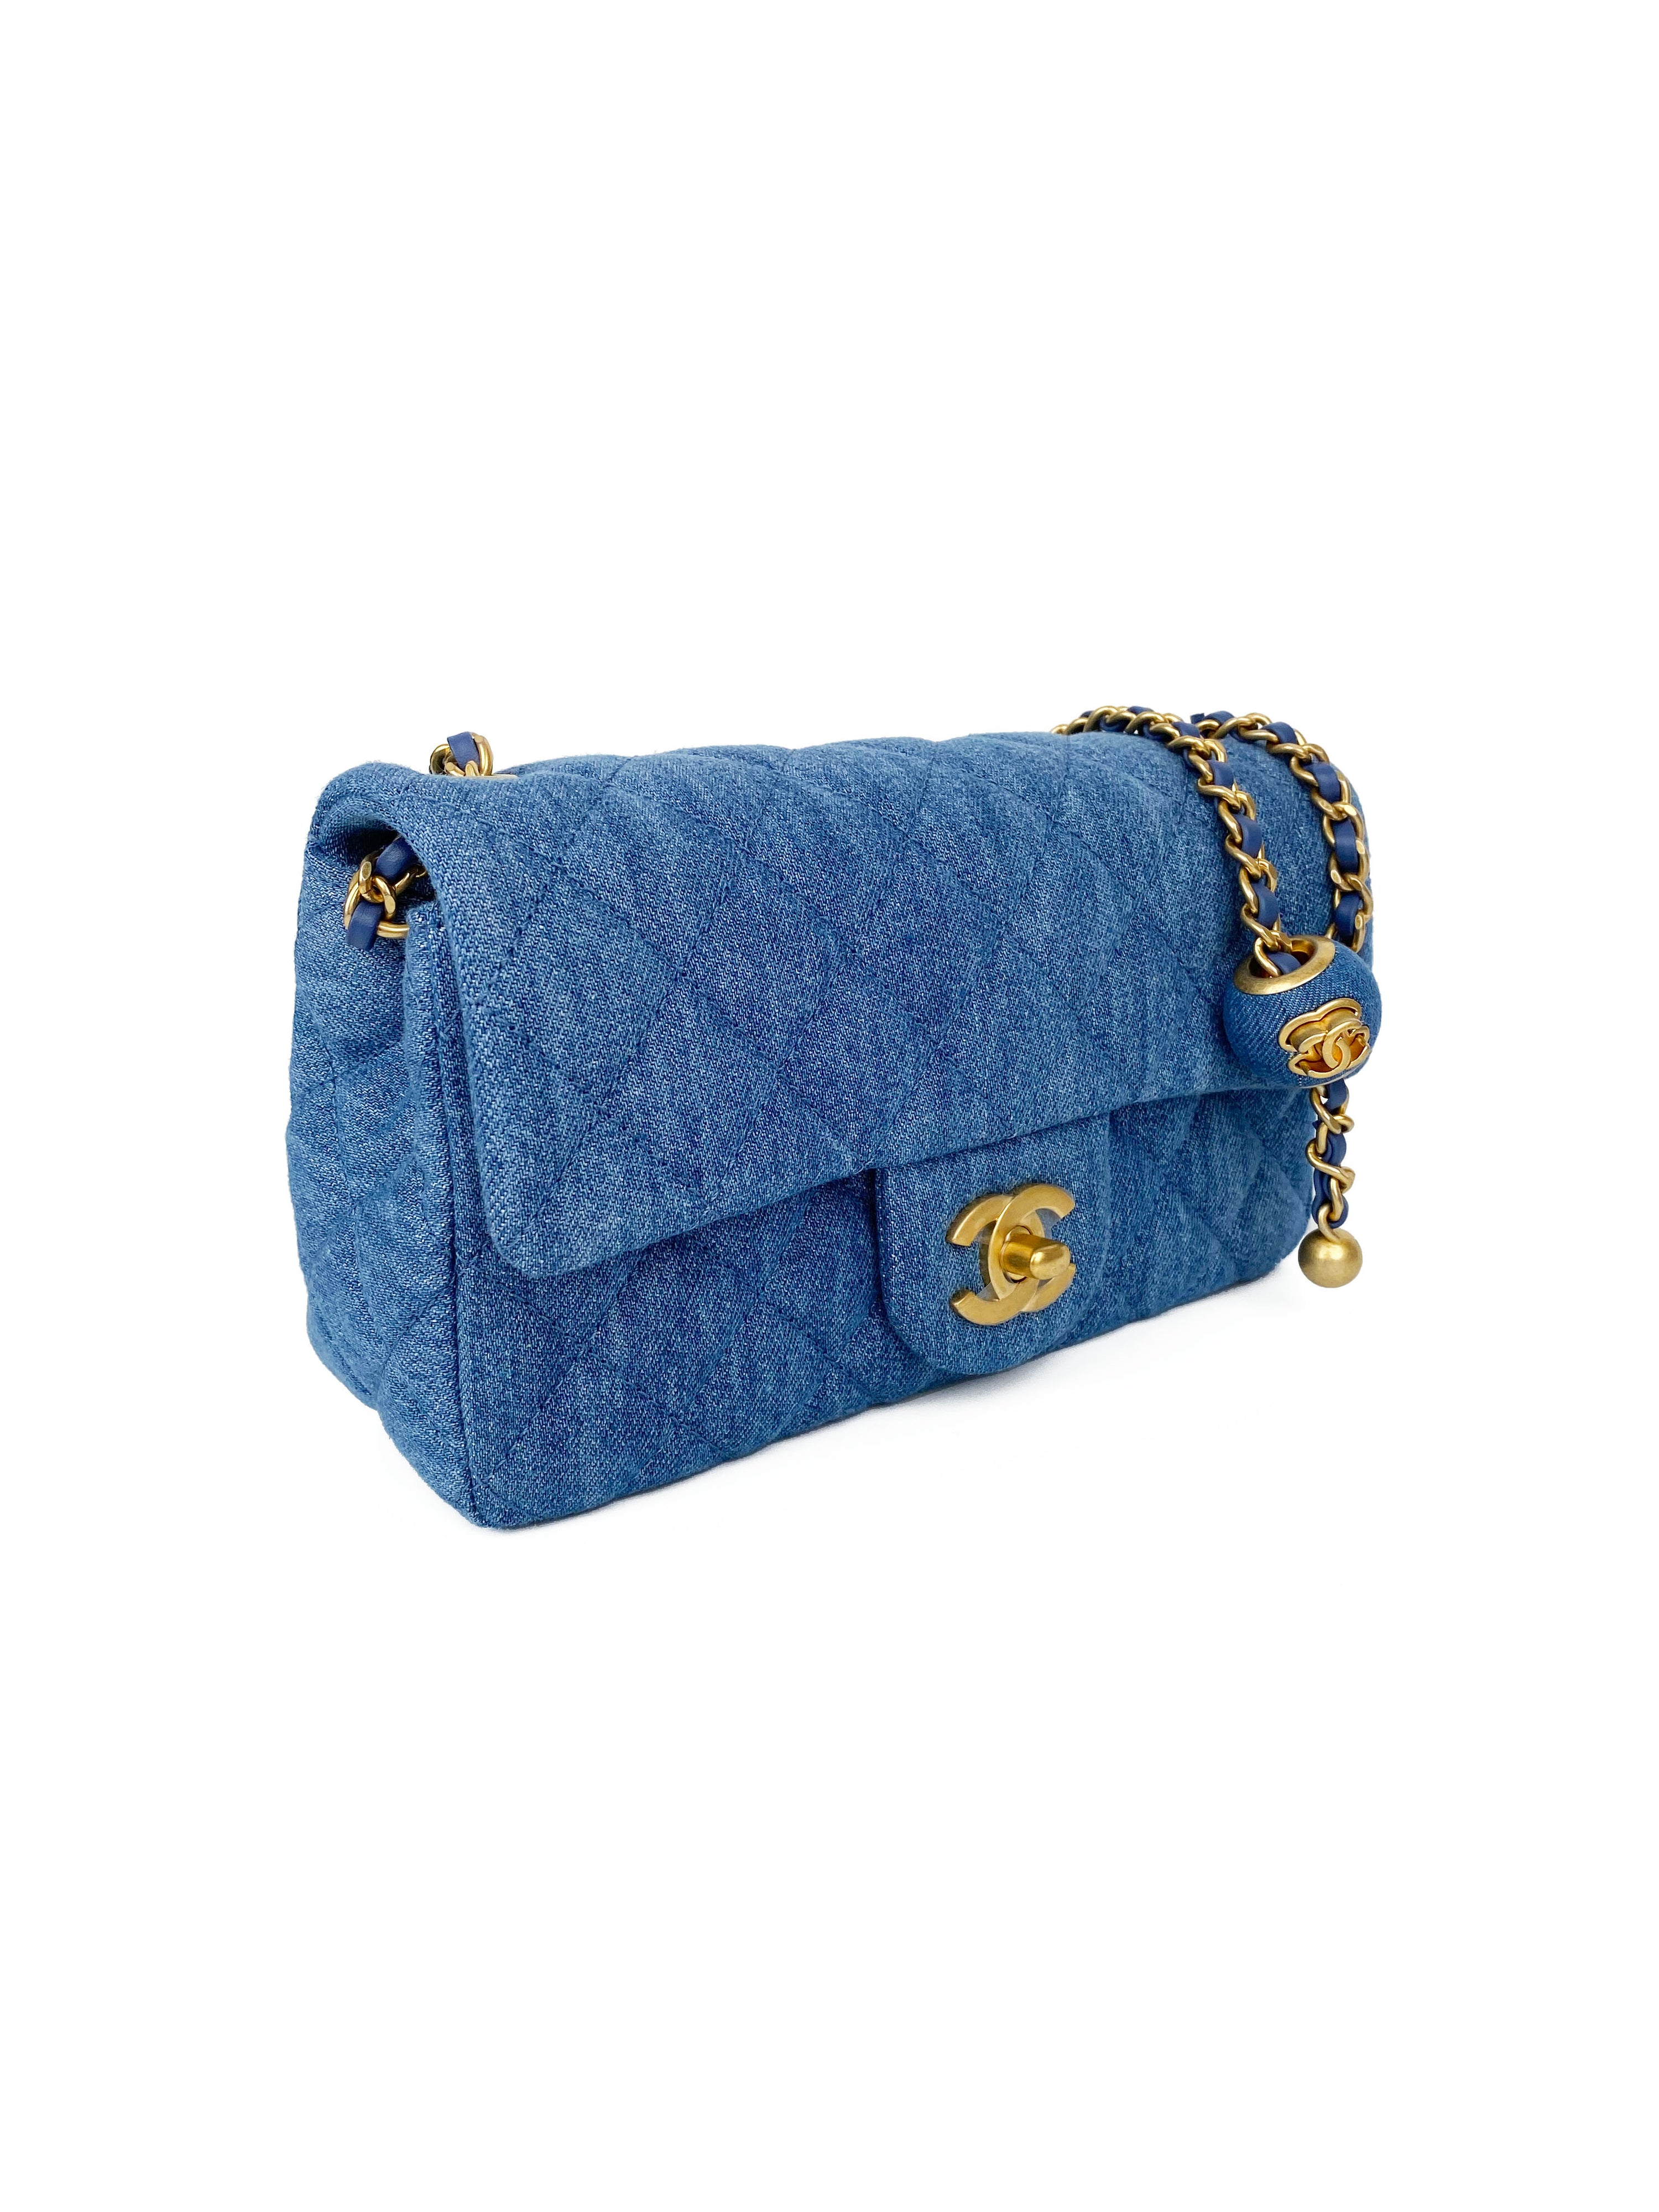 Chanel Mini Denim Classic Flap Bag with Pearl Crush